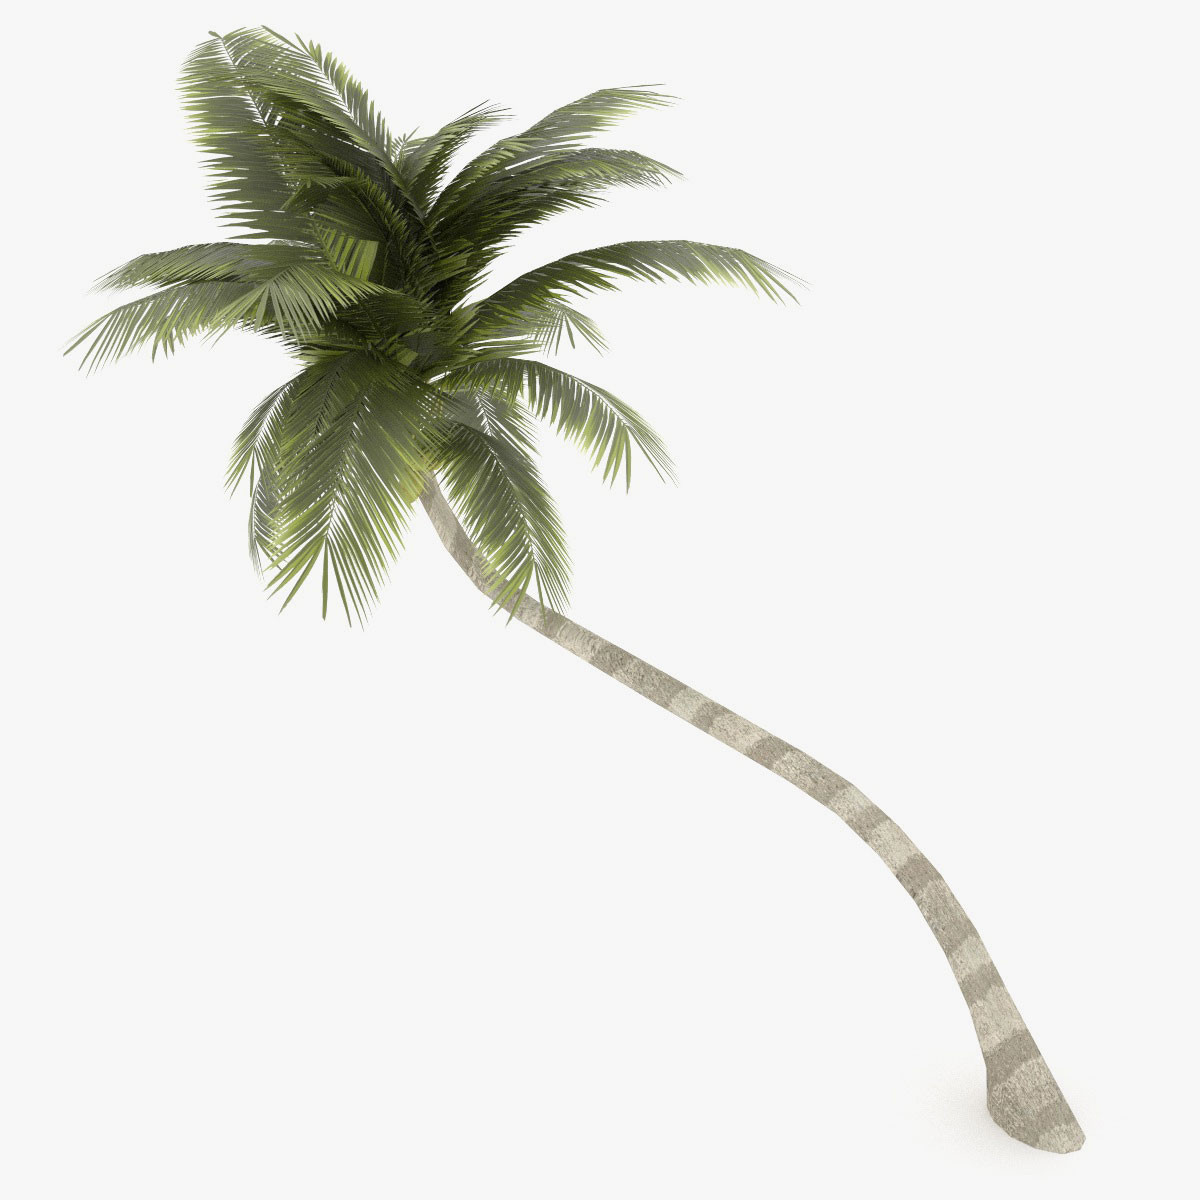 Island beach coconut trees, T